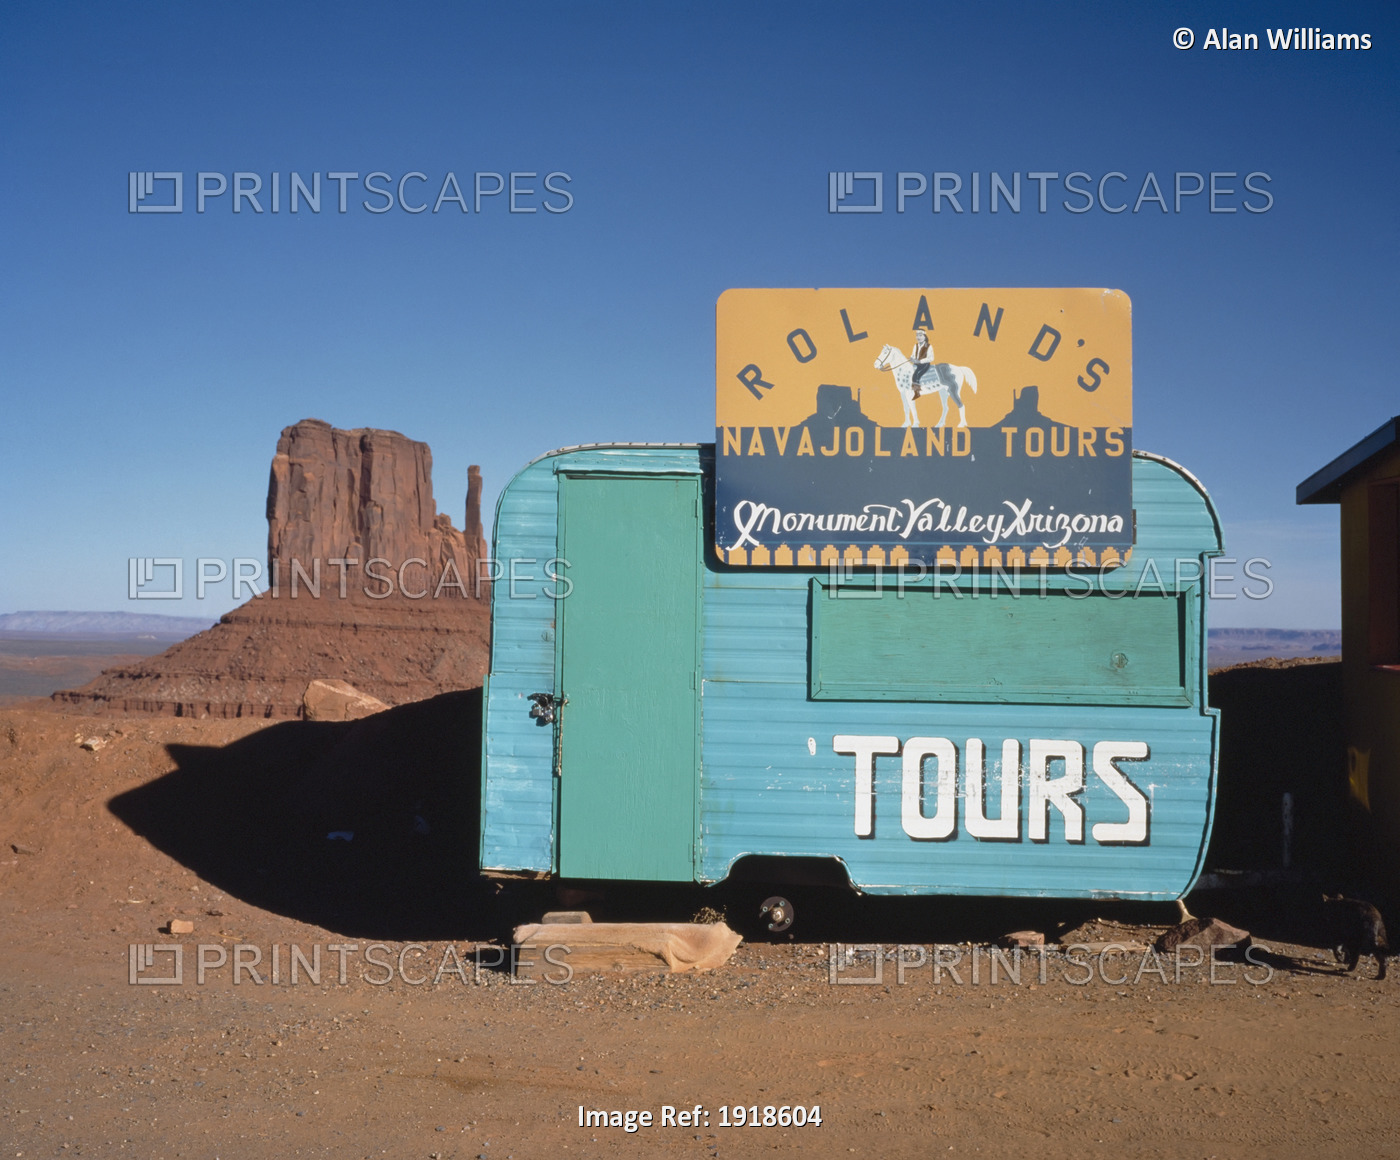 Roland's Navajoland Tours